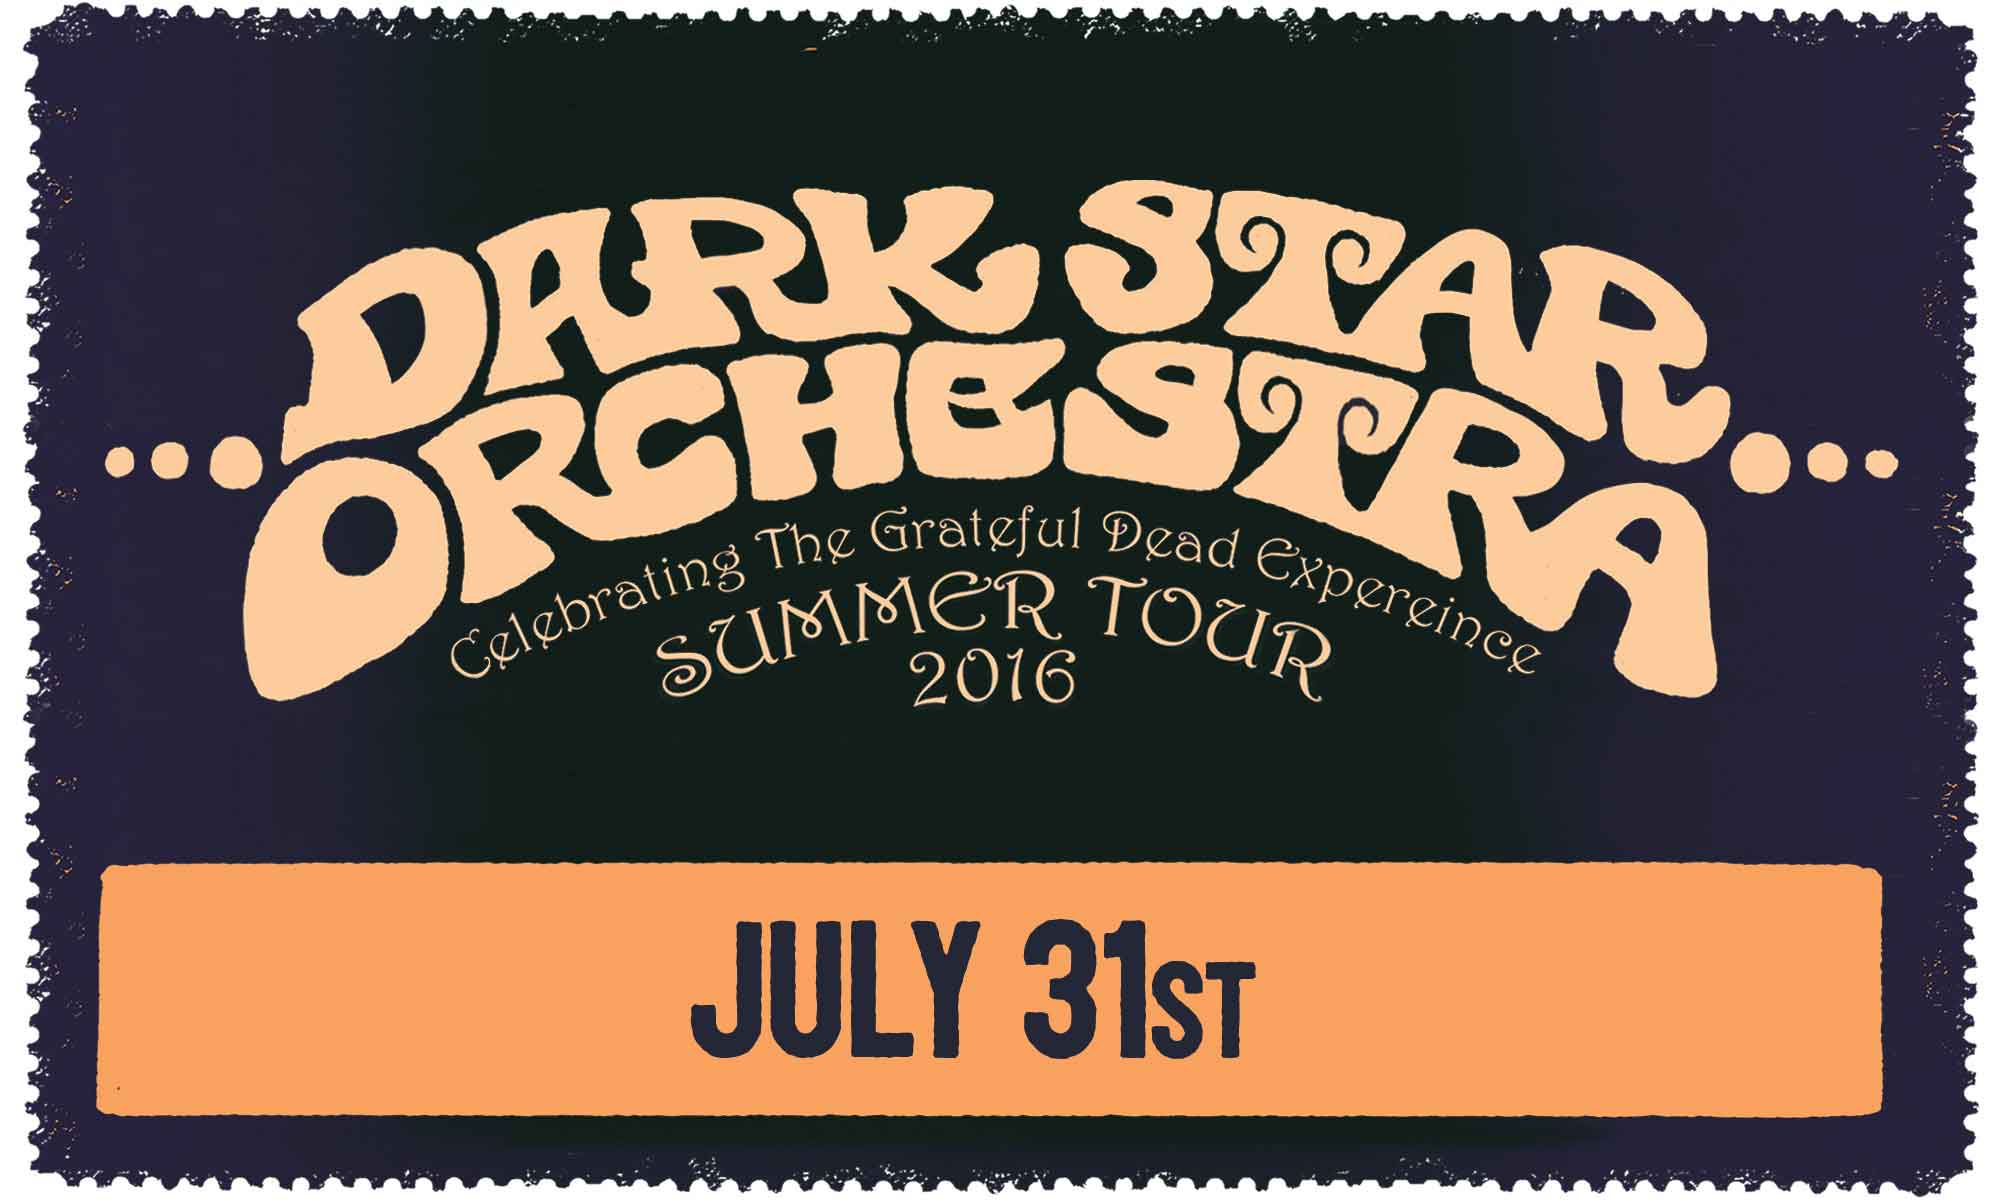 Dark Star Orchestra at Coney Island Amphitheater on 07-31-16